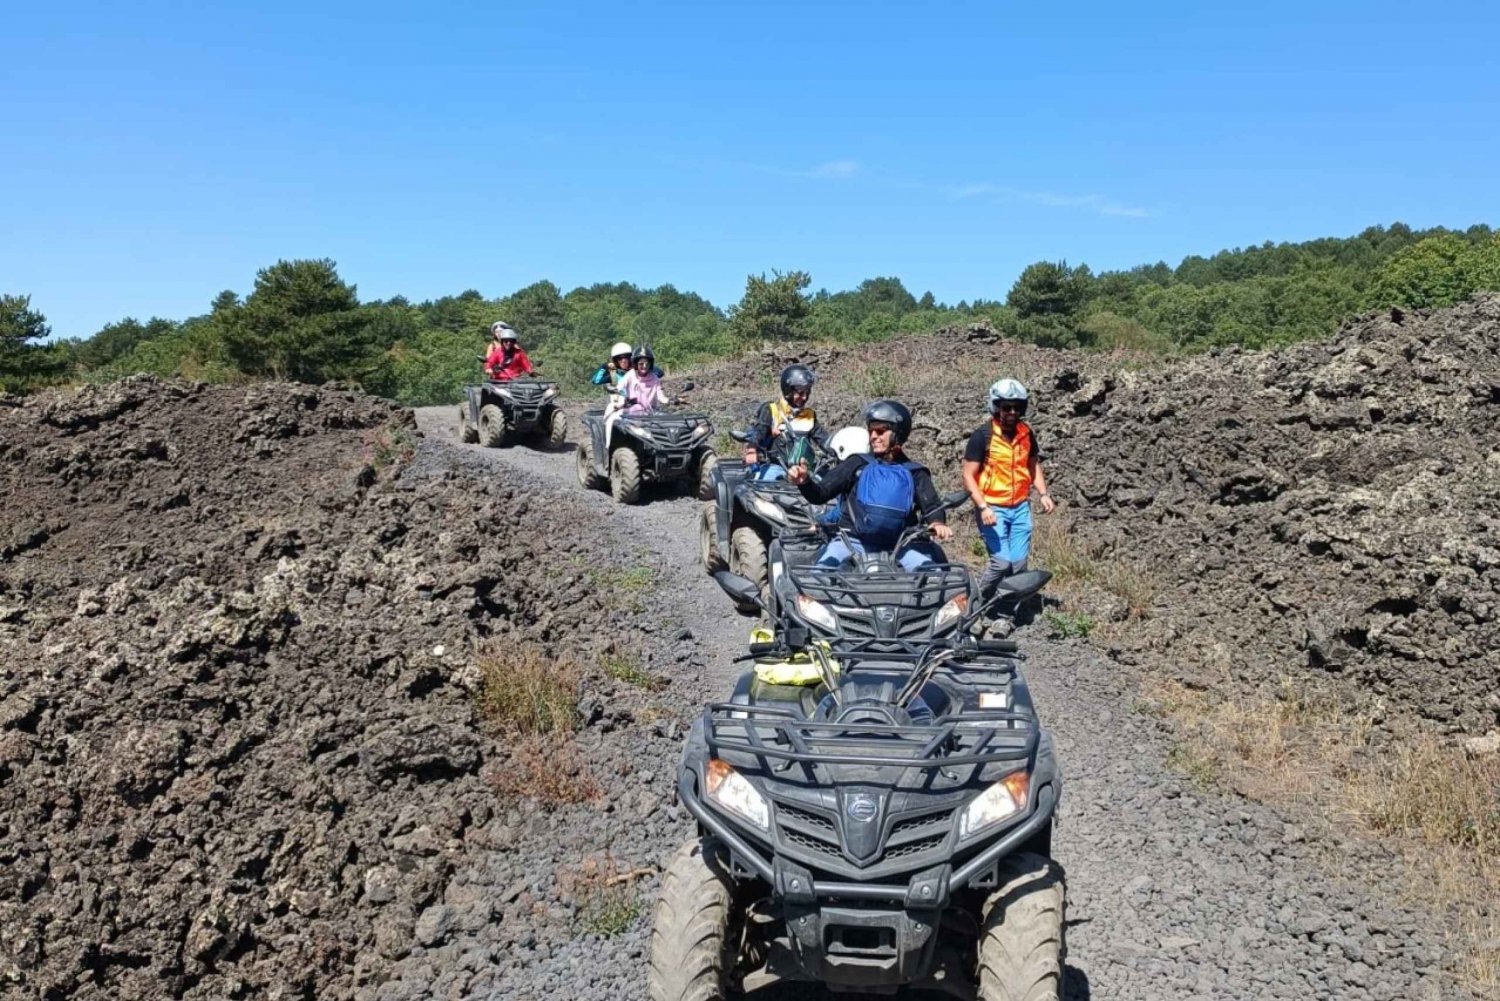 Mount Etna: Off-Road ATV Tour